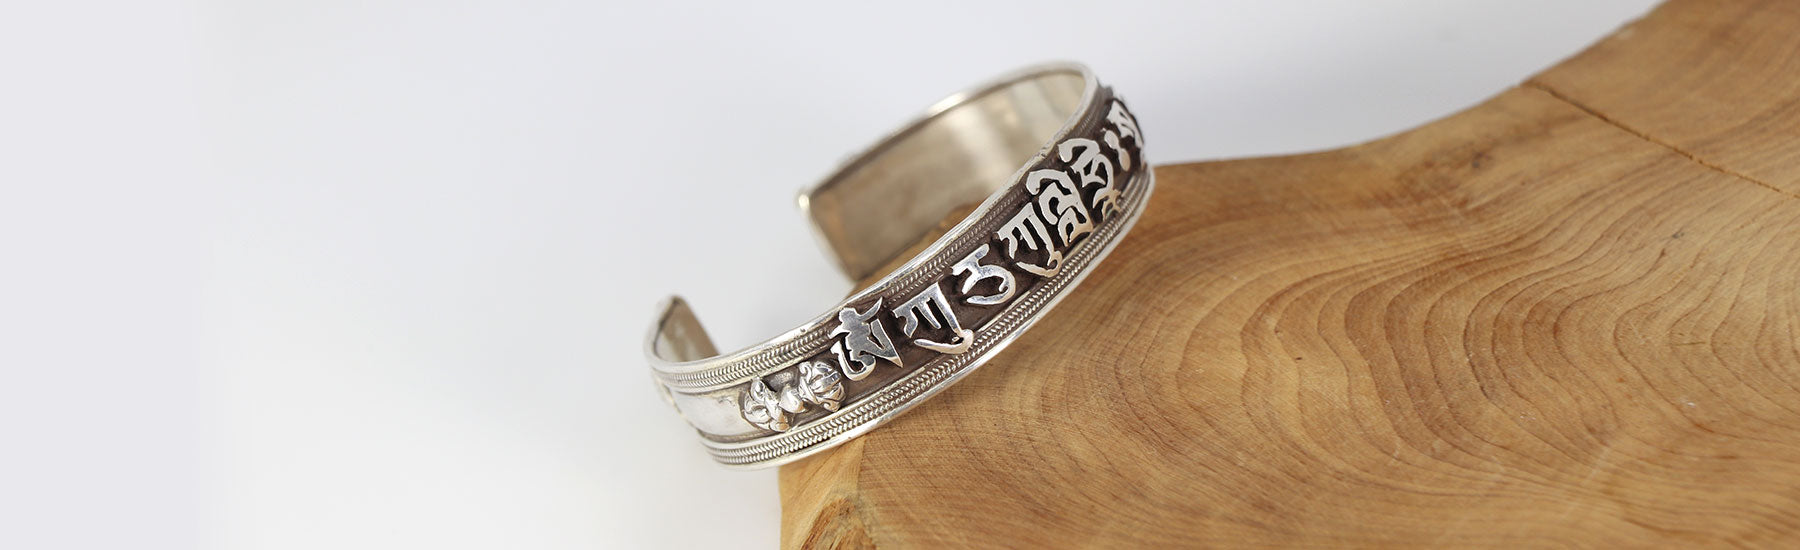 Nepali Mantra Bracelets - mantrapiece.com